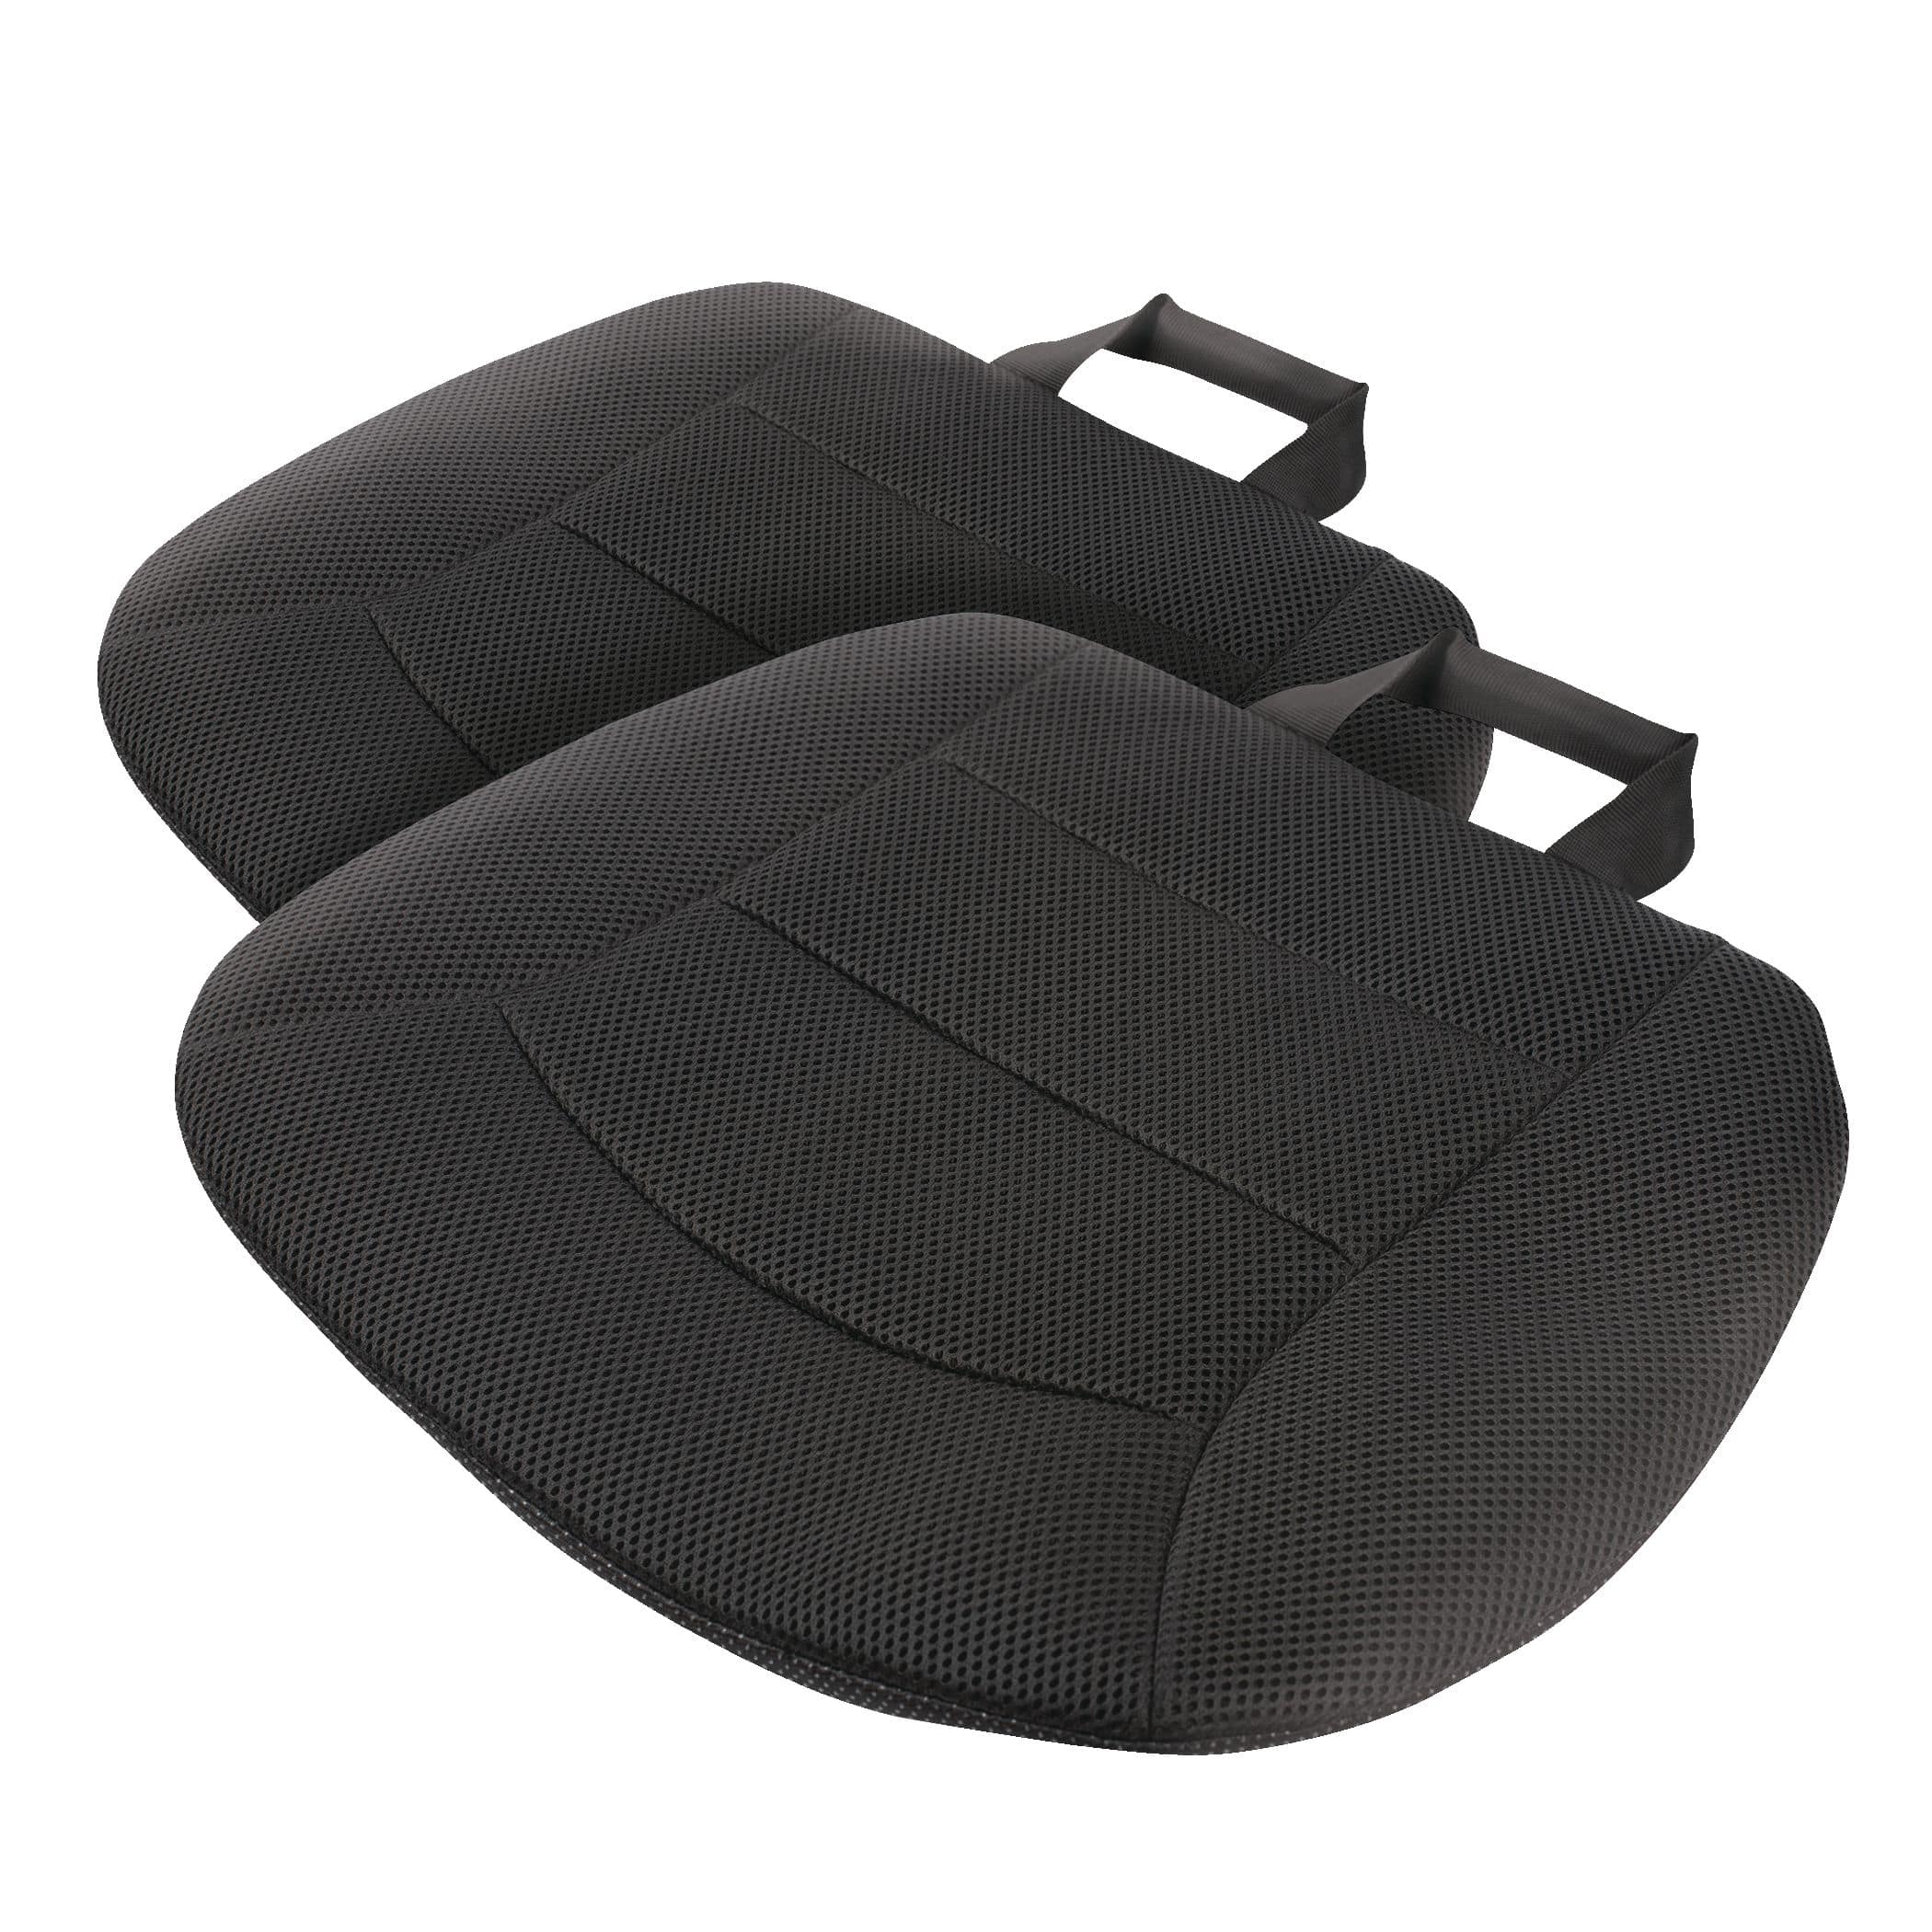 AutoTrends Mesh Gel Seat Cushion, 2-pk